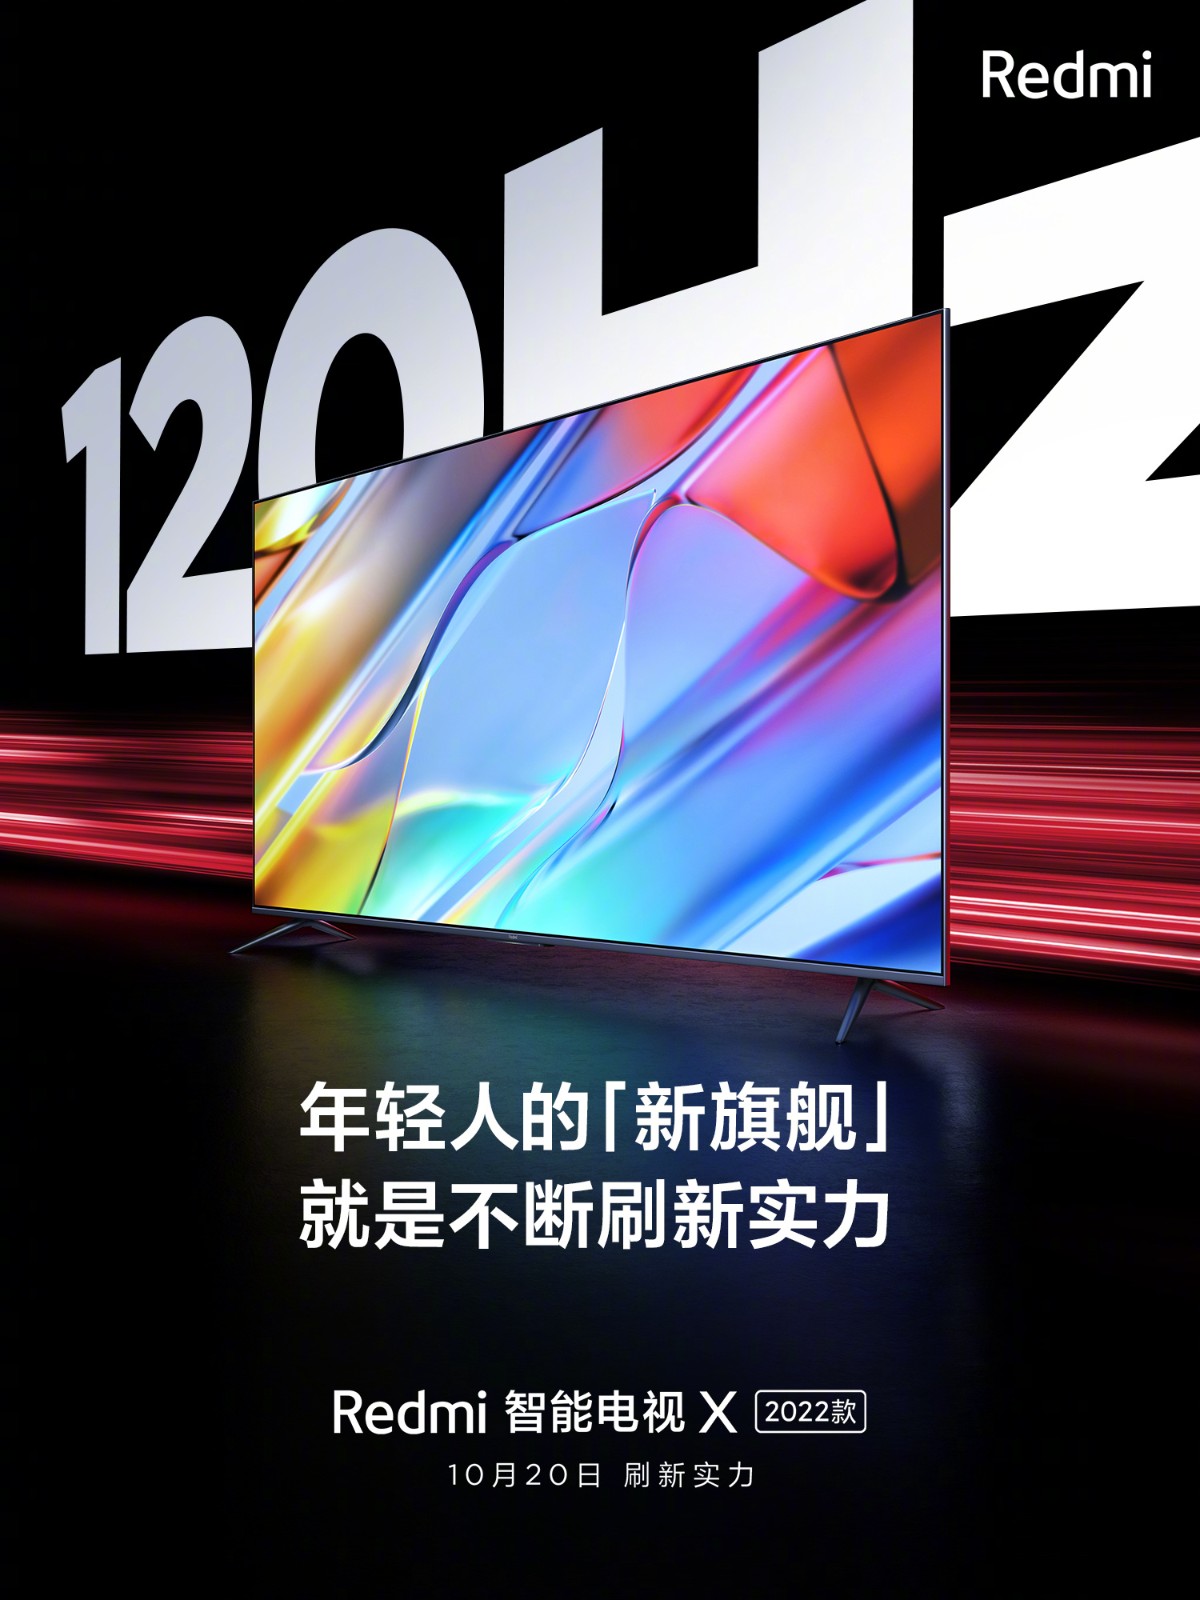 Redmi智能电视X2022款将发布 年轻人的“新旗舰”